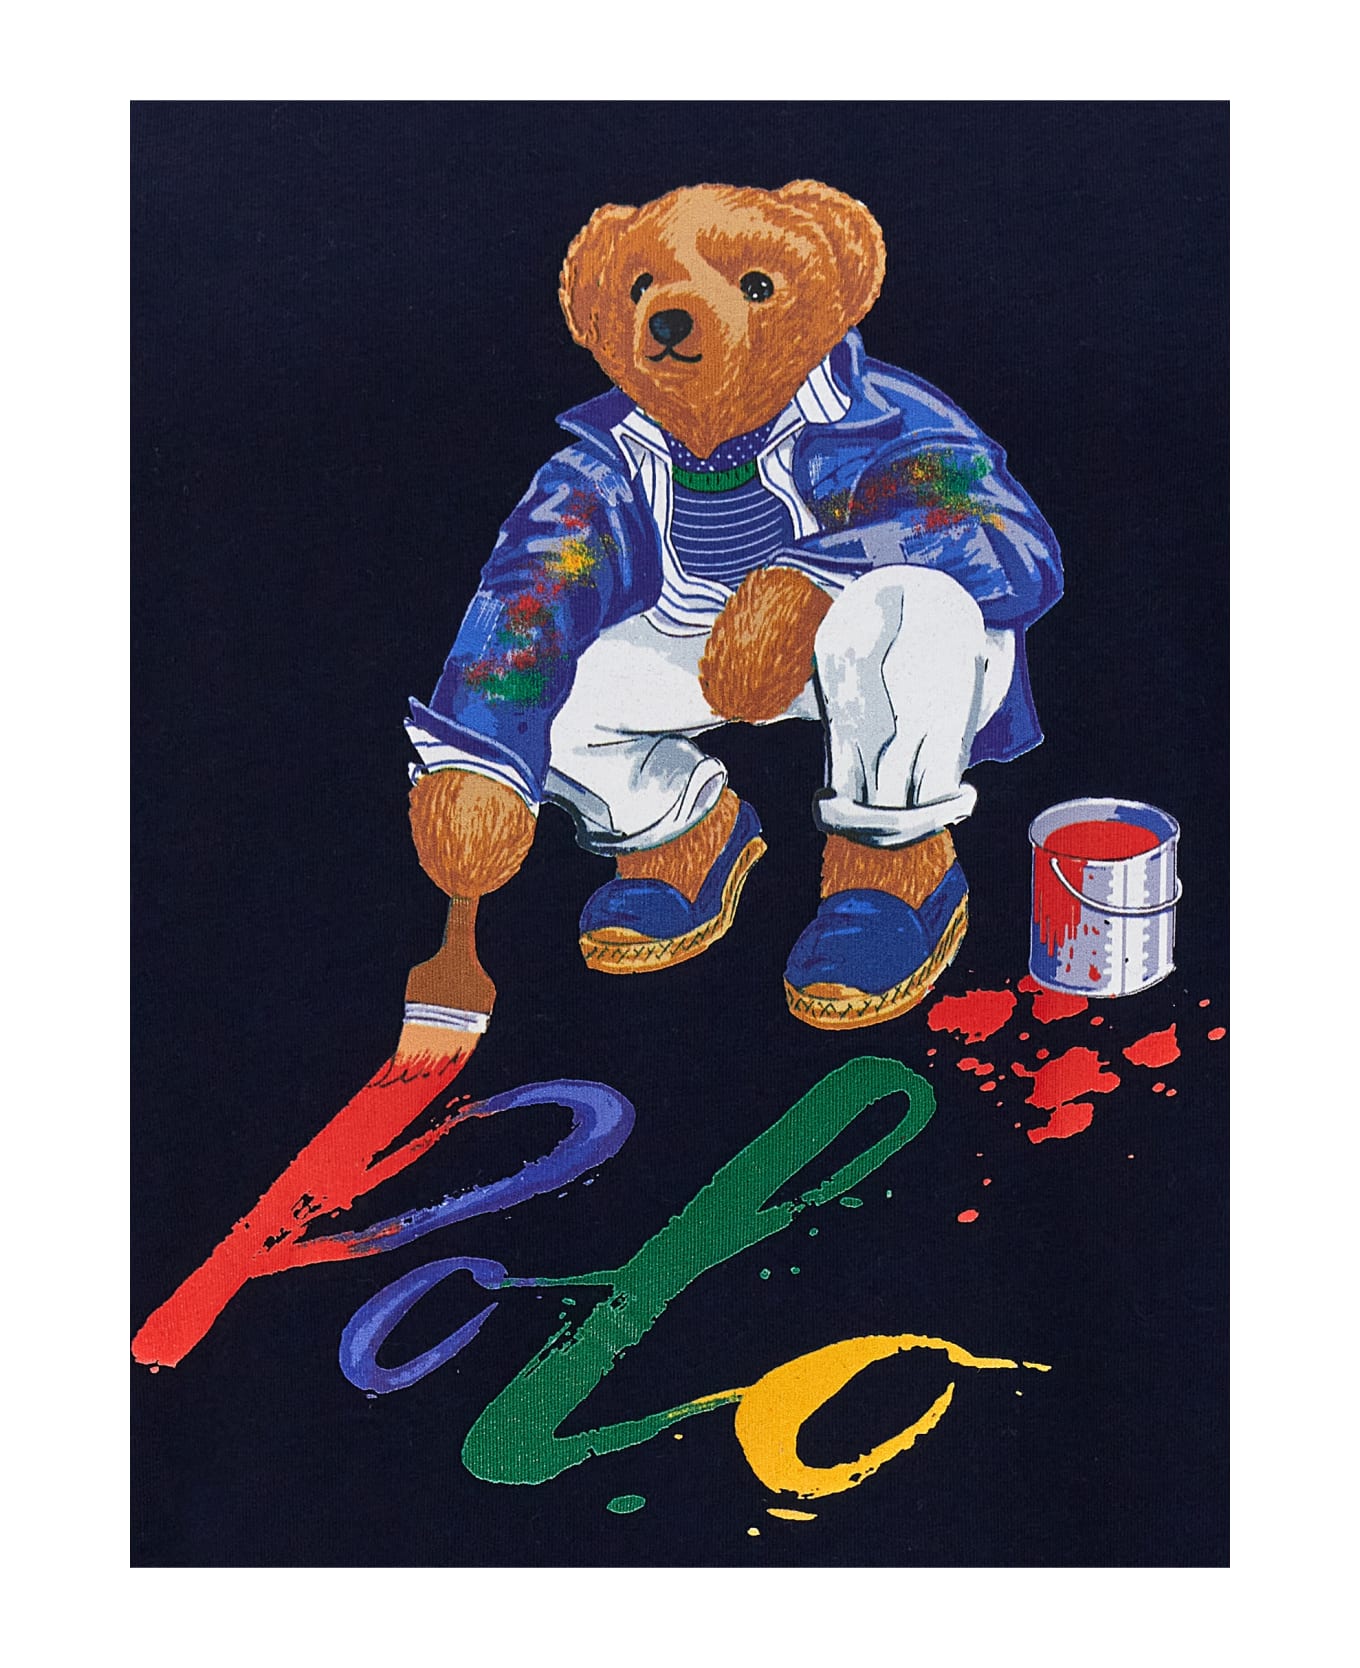 Polo Ralph Lauren 'polo Bear' T-shirt - navy シャツ